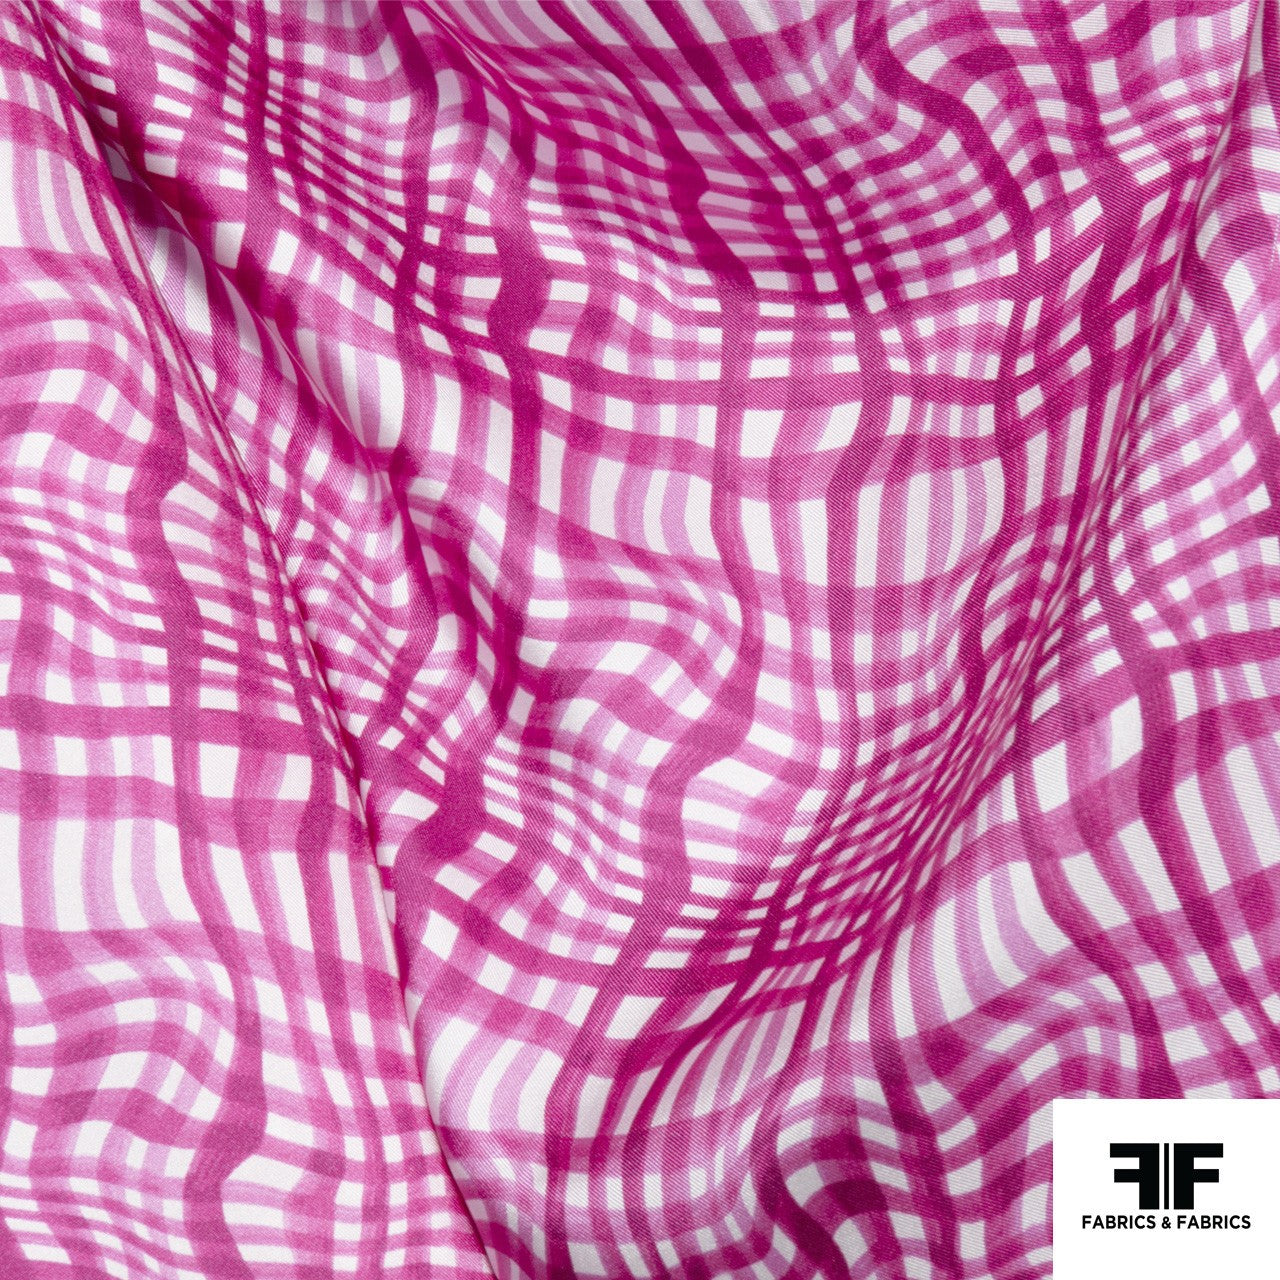 Broken Gingham Check Printed Cotton - Pink/White - Fabrics & Fabrics NY